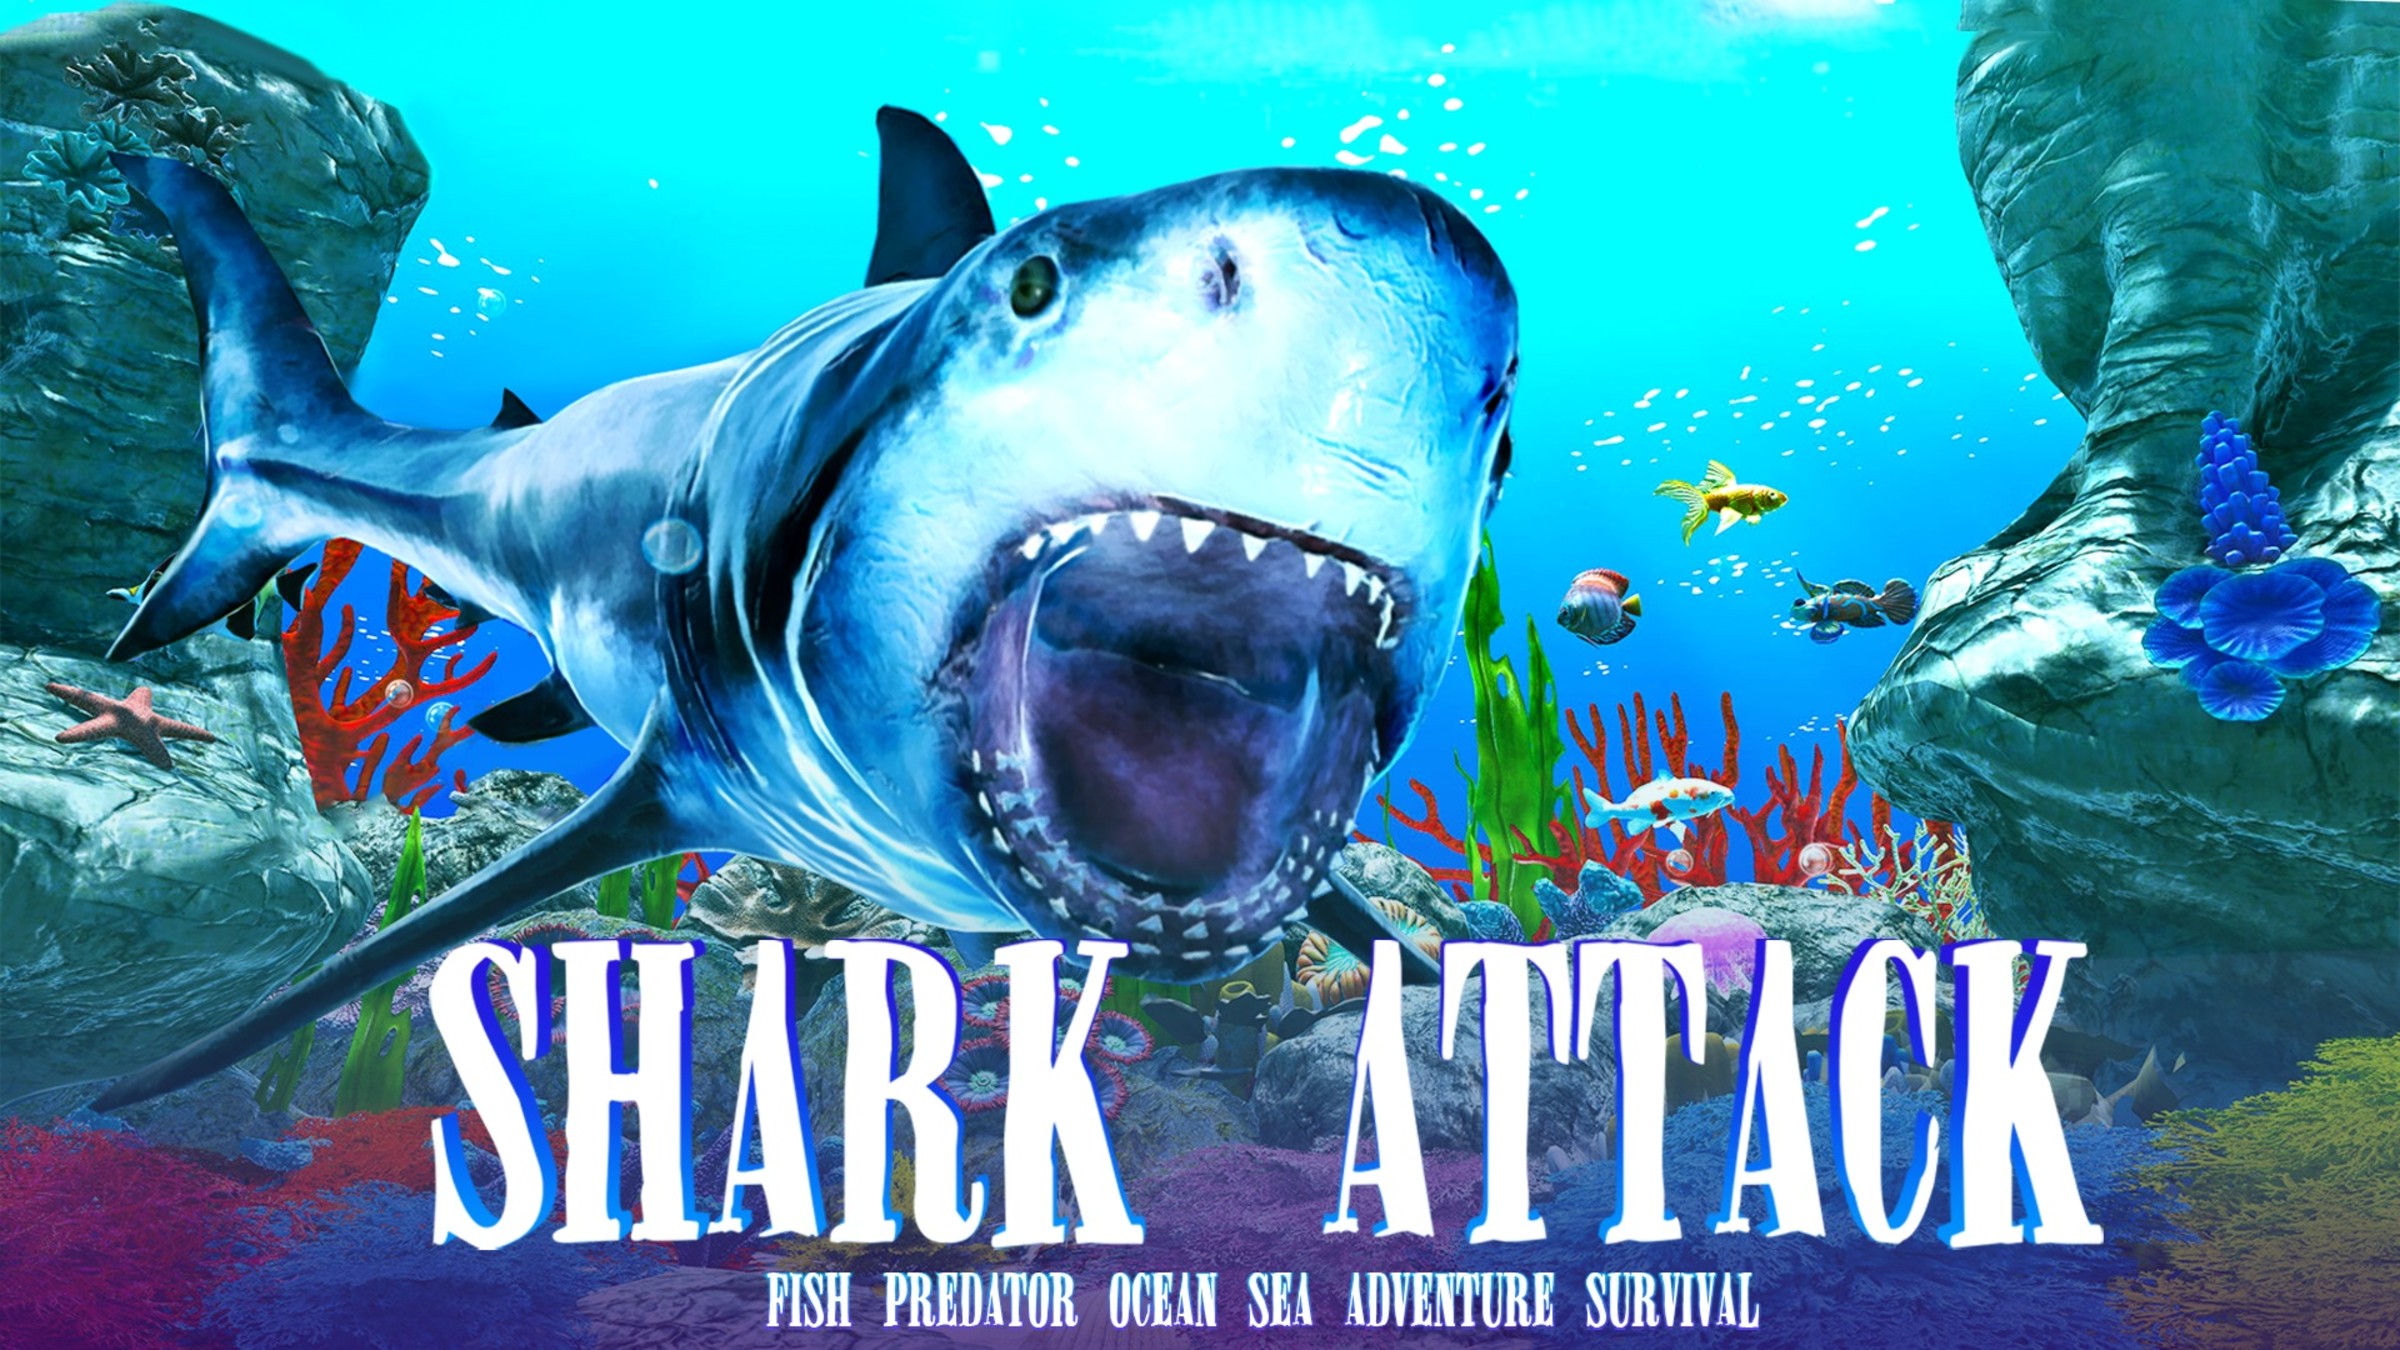 https://assets.nintendo.com/image/upload/c_fill,w_1200/q_auto:best/f_auto/dpr_2.0/ncom/en_US/games/switch/s/shark-attack-fish-predator-ocean-sea-adventure-survival-switch/